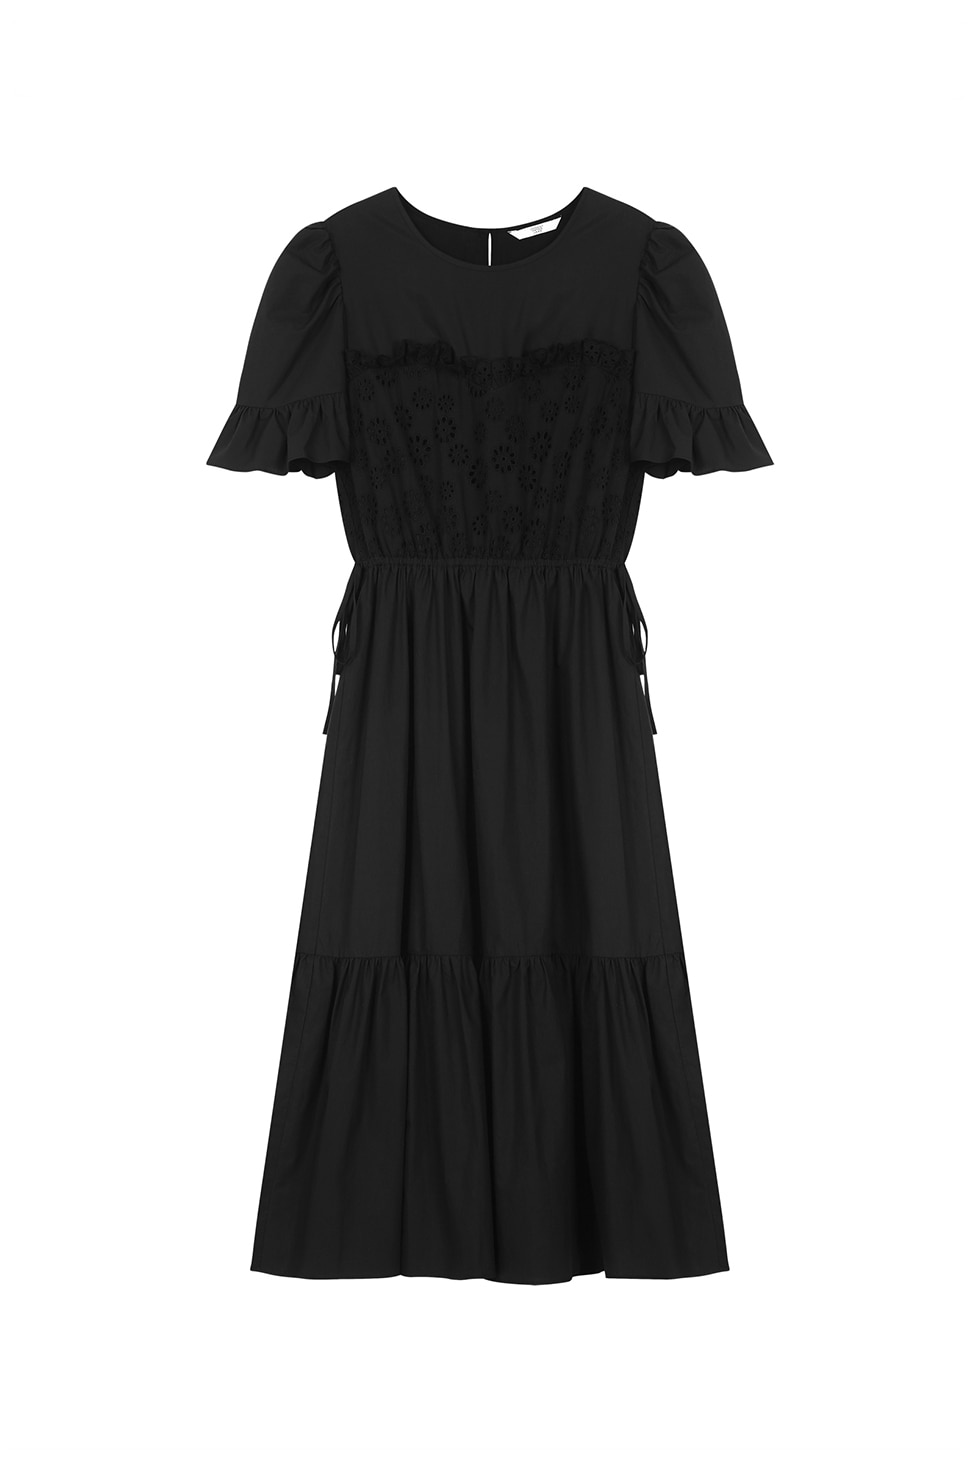 EMBROIDERY LAYERED COTTON DRESS - BLACK